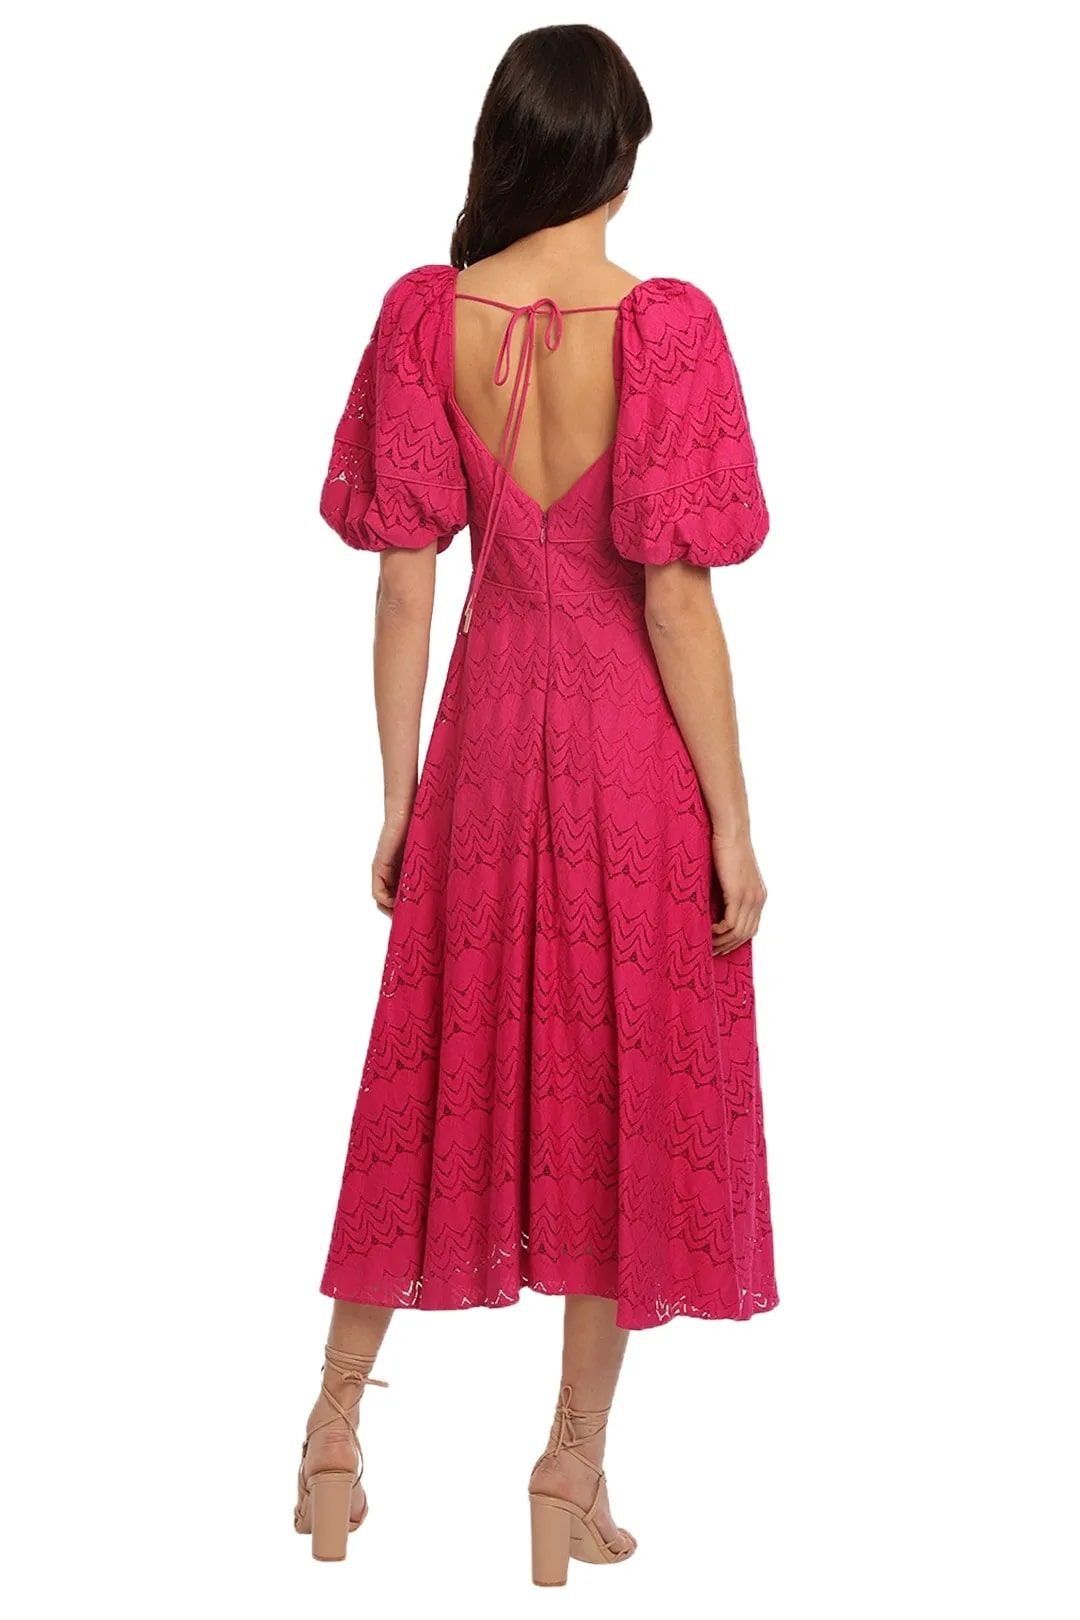 Acler Stapleton Dress, ideal for formal events, rental option